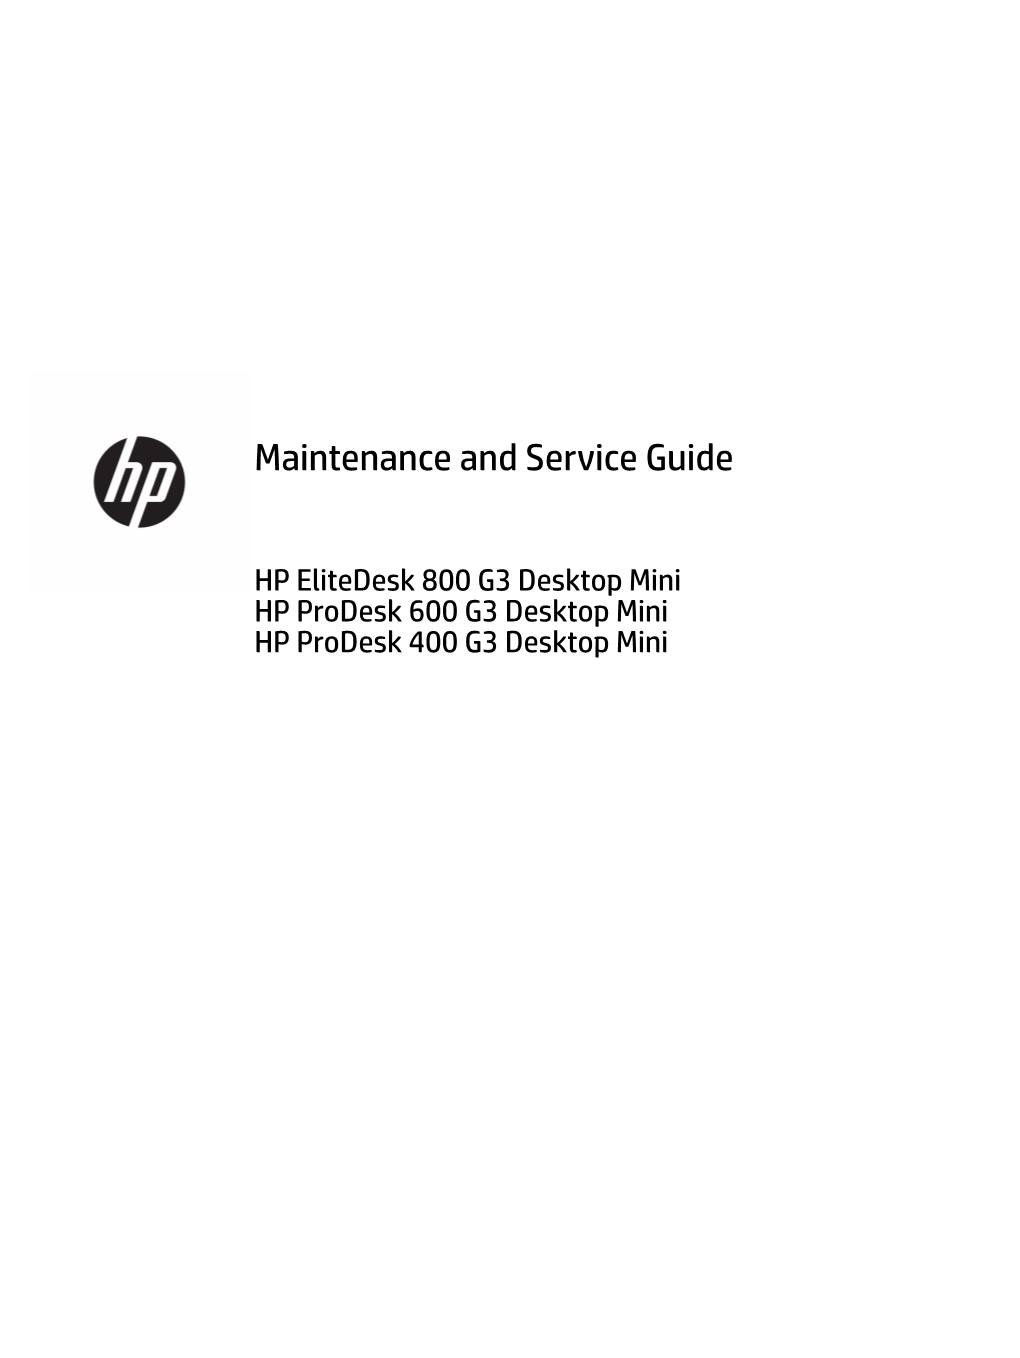 Maintenance and Service Guide HP Elitedesk 800 G3 Desktop Minihp